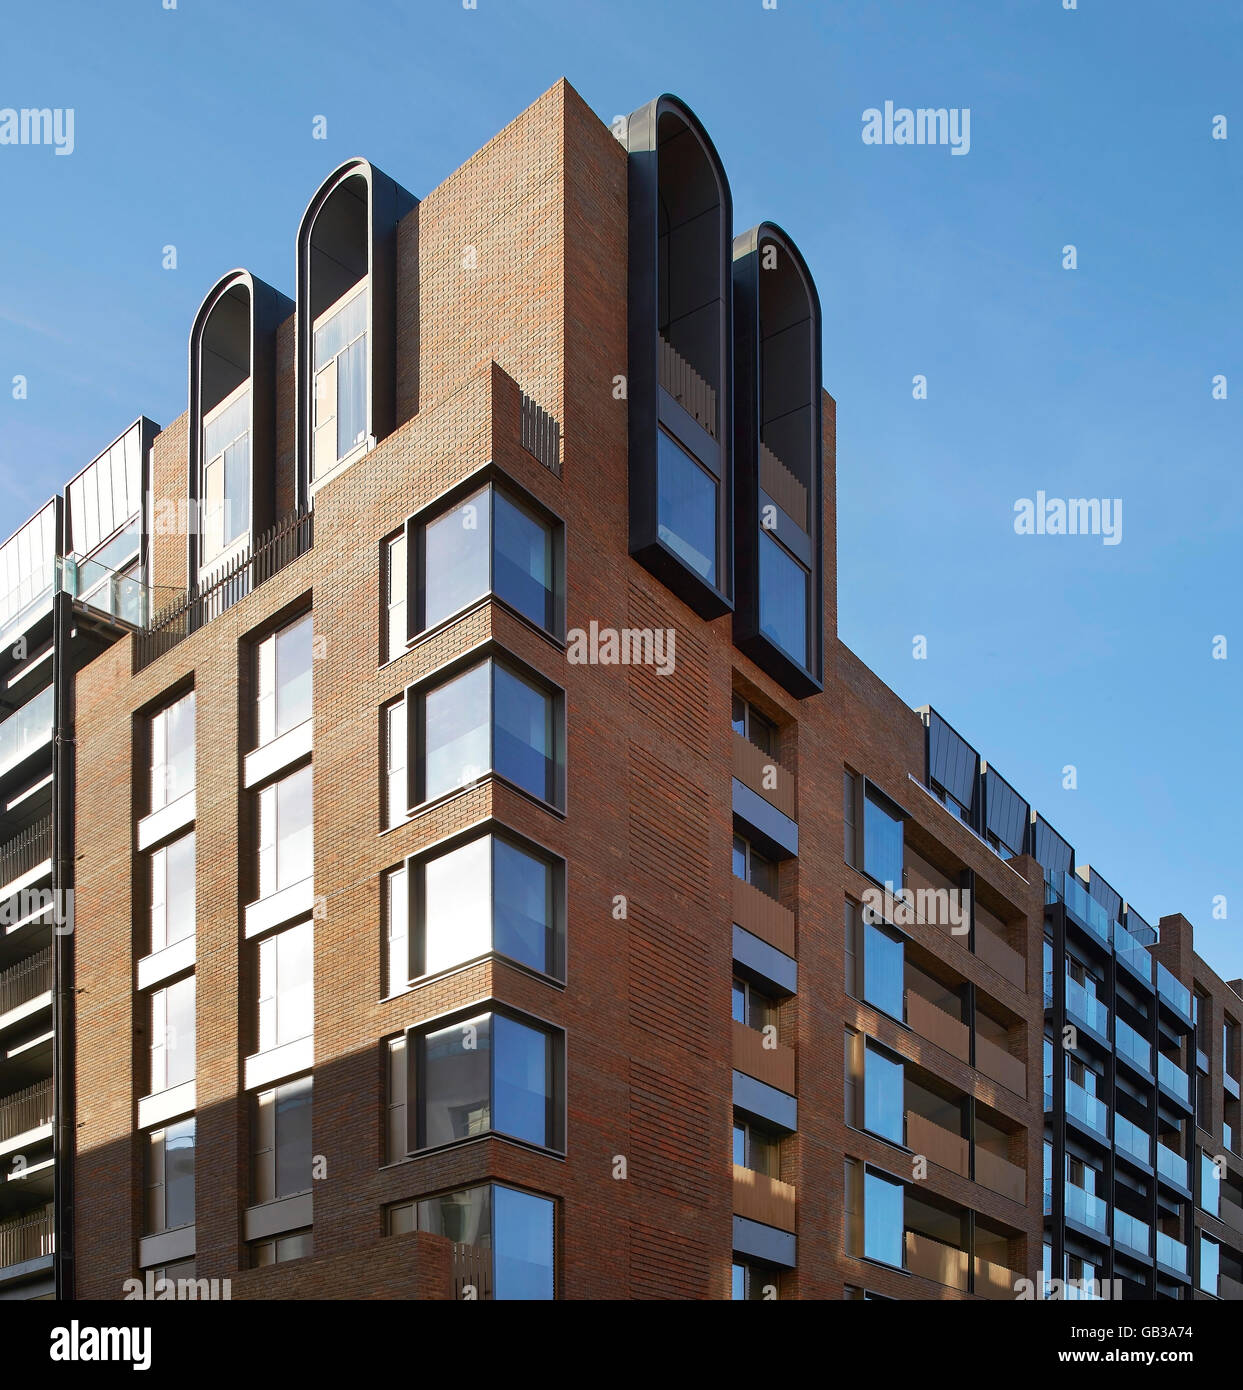 Corner elevation of red-brick clad residential block. Fitzroy Place, London, United Kingdom. Architect: Lifschutz Davidson Sandilands, 2015. Stock Photo